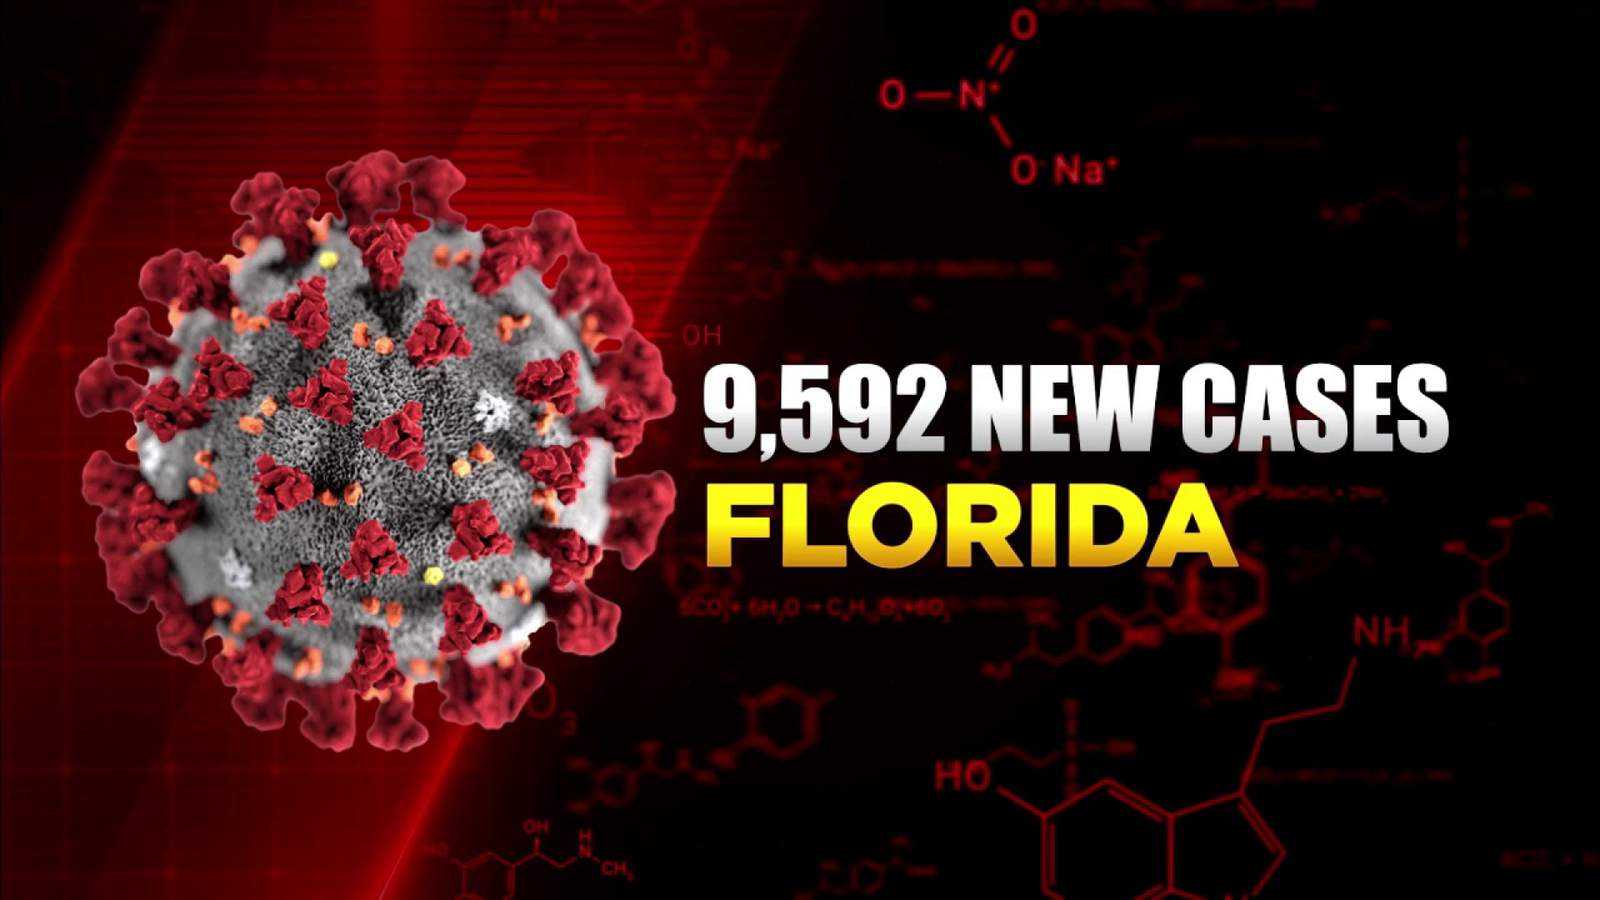 Florida confirms 9,592 new coronavirus cases Wednesday